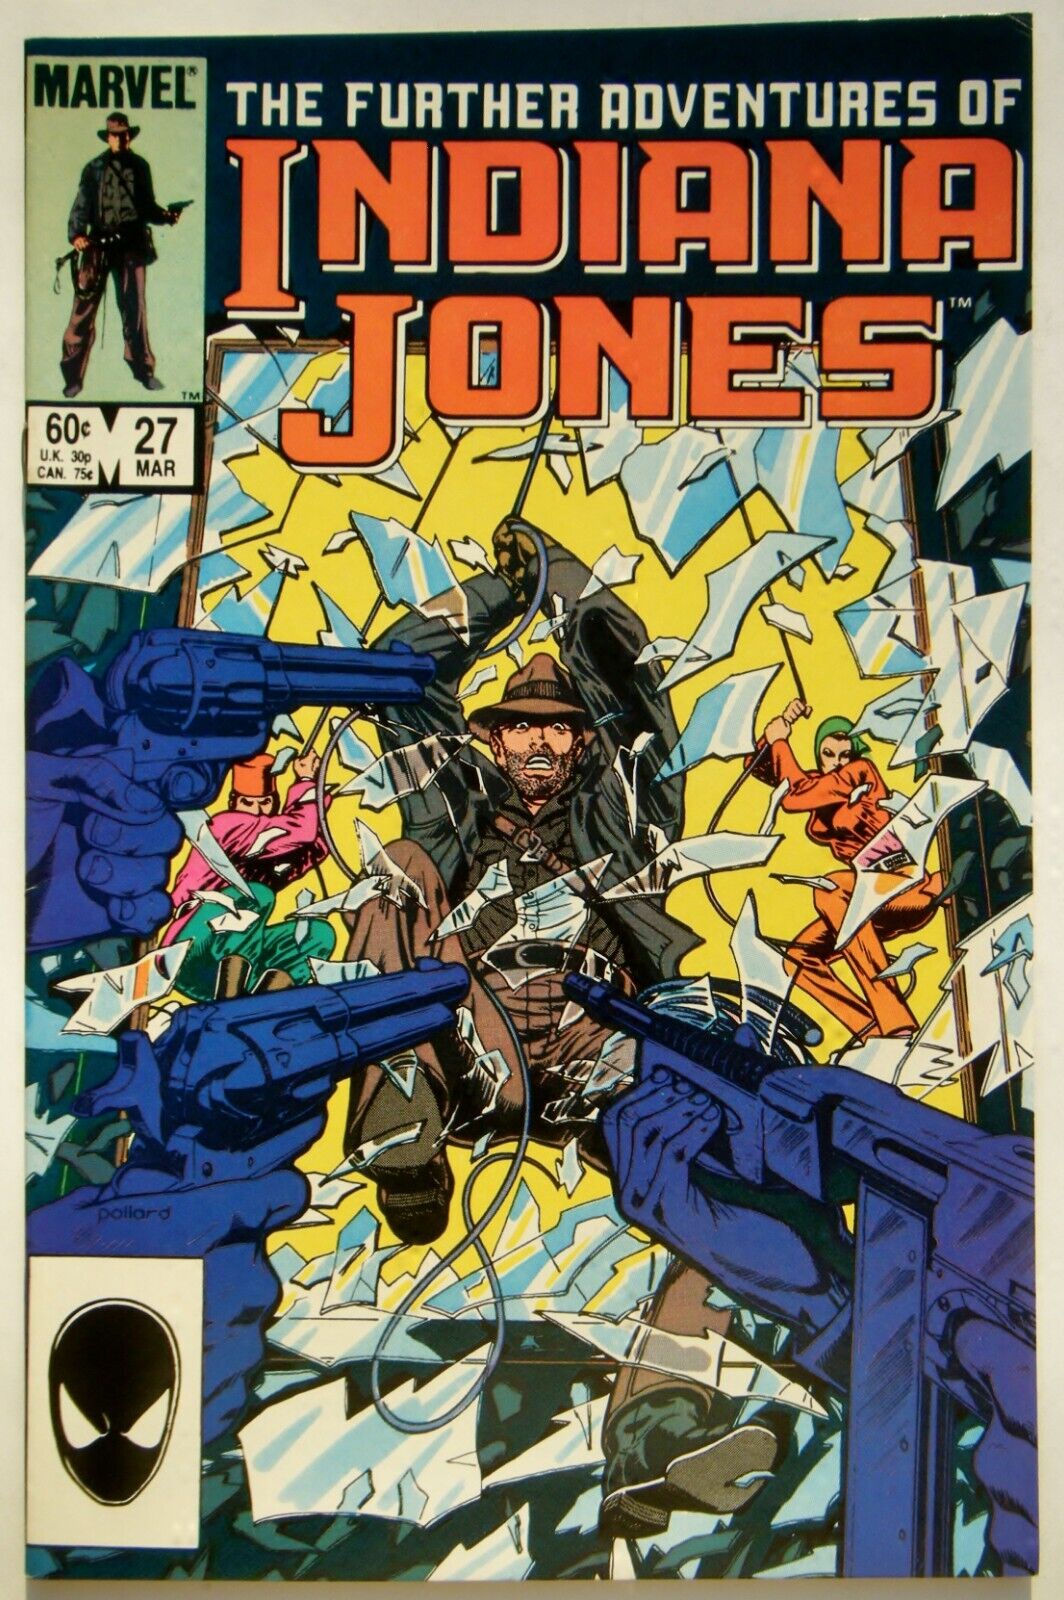 Further Adventures of Indiana Jones #27 (Mar. 85\') VF+ (8.5) Keith Pollard Cover